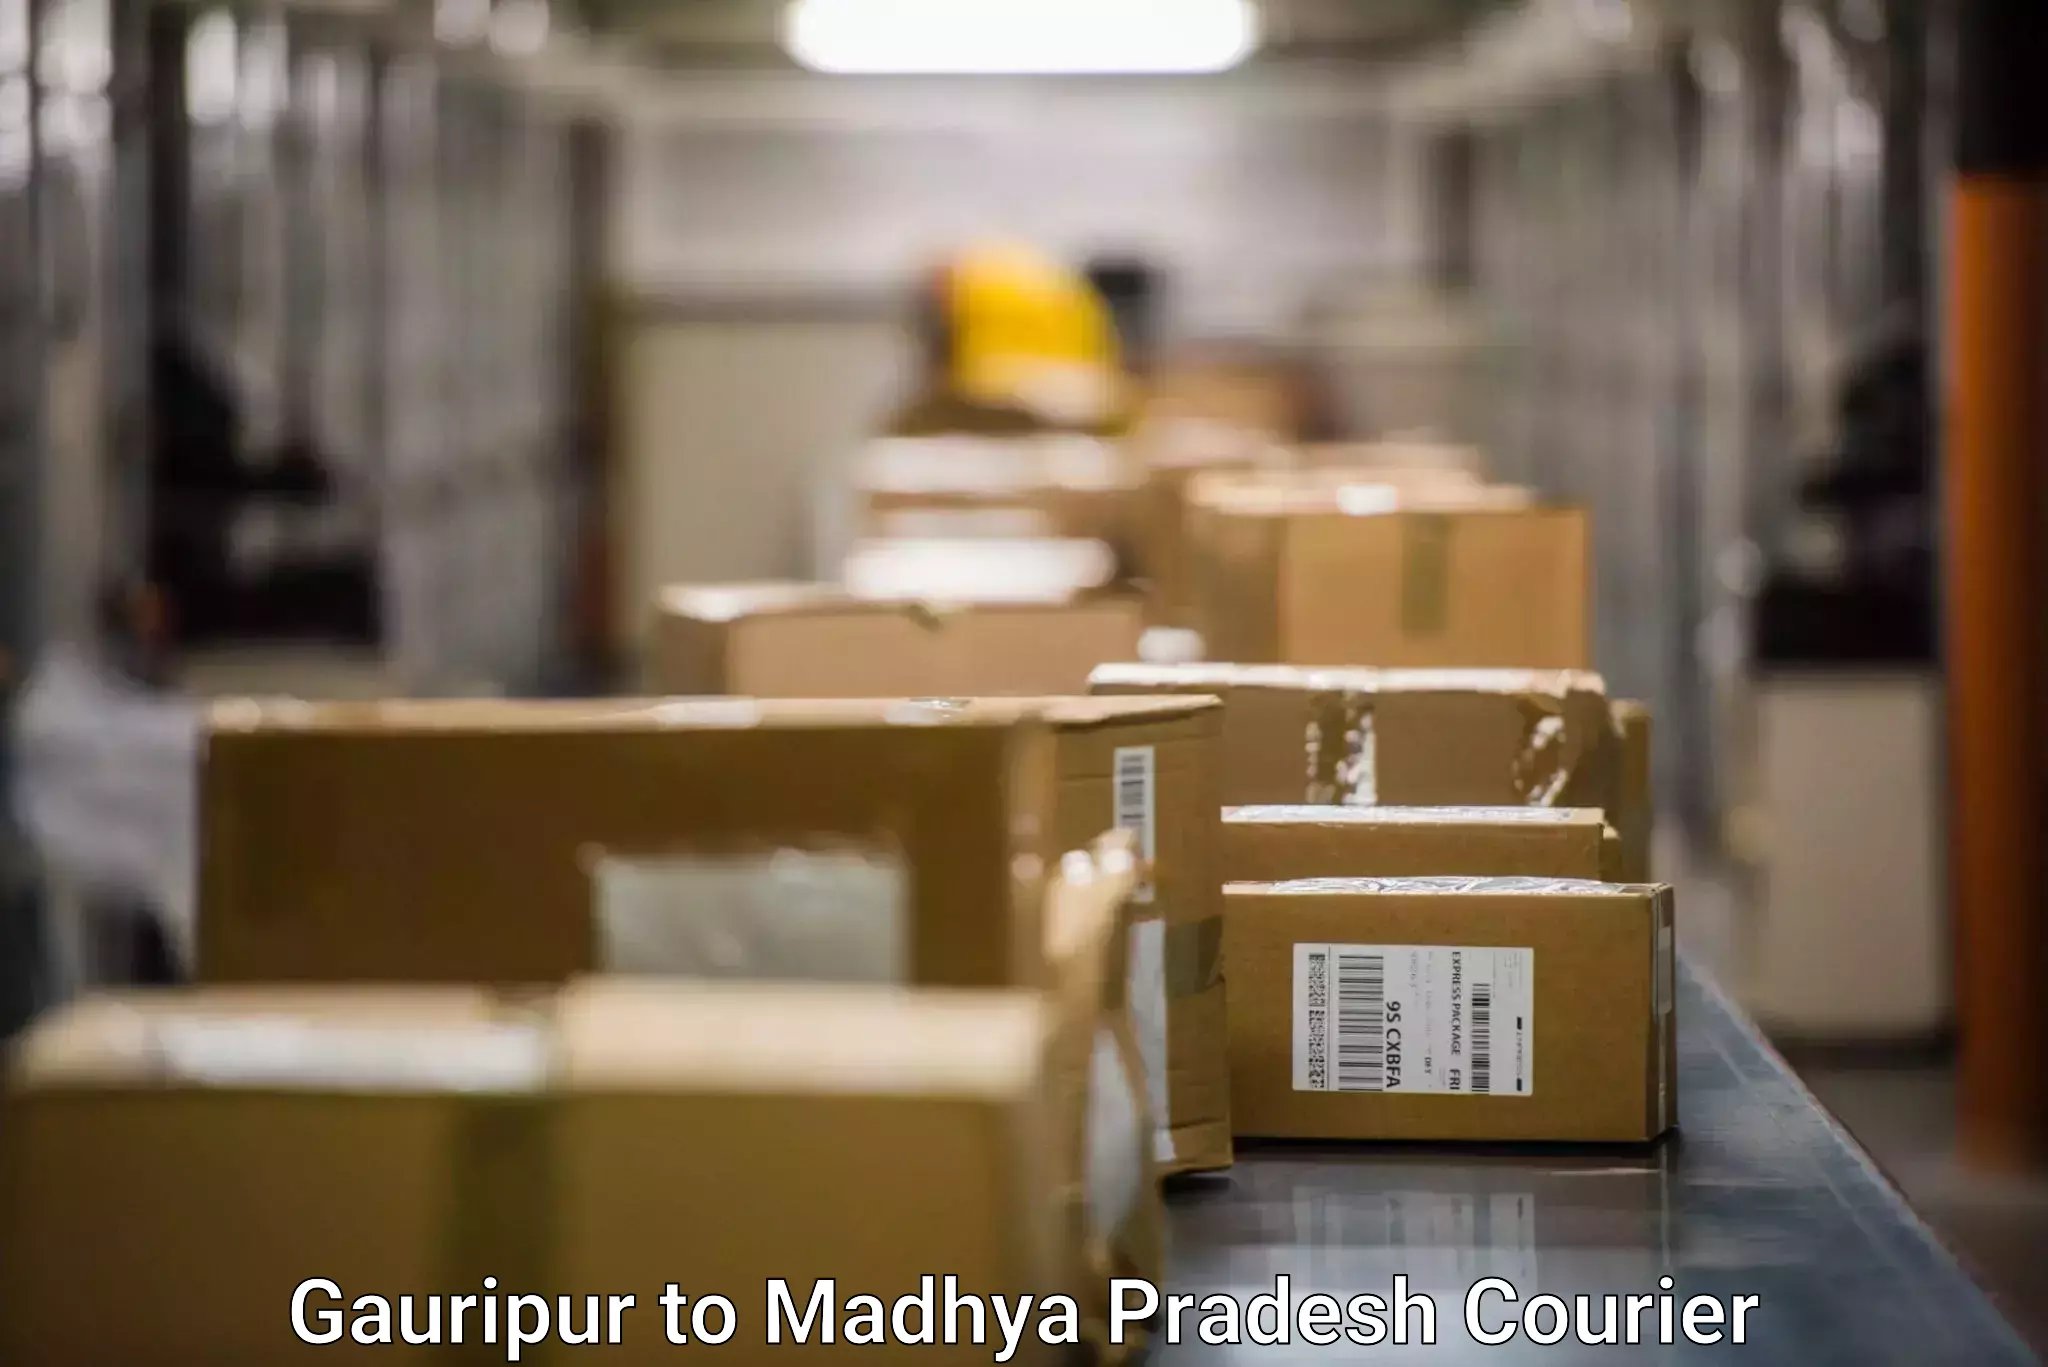 Customer-focused courier Gauripur to Manasa